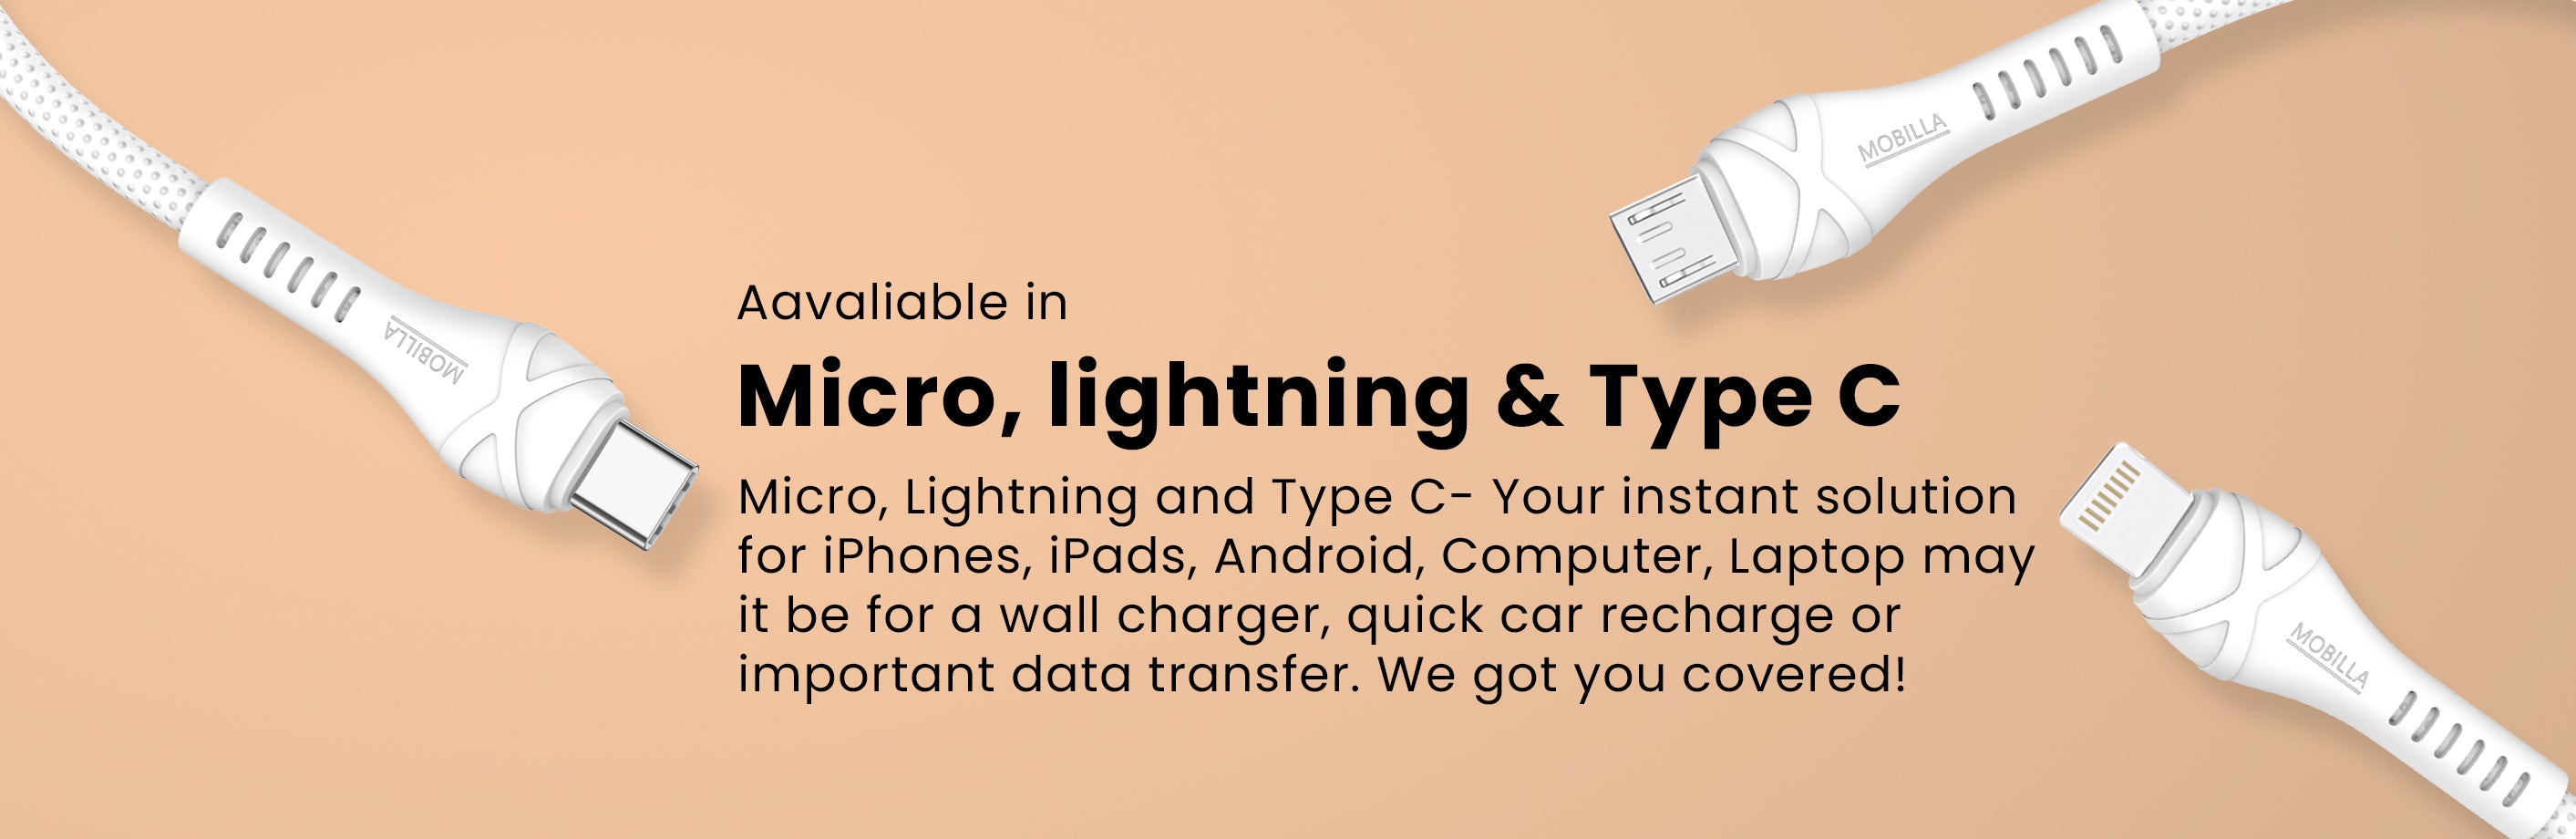 Type C, Lightning, Micro